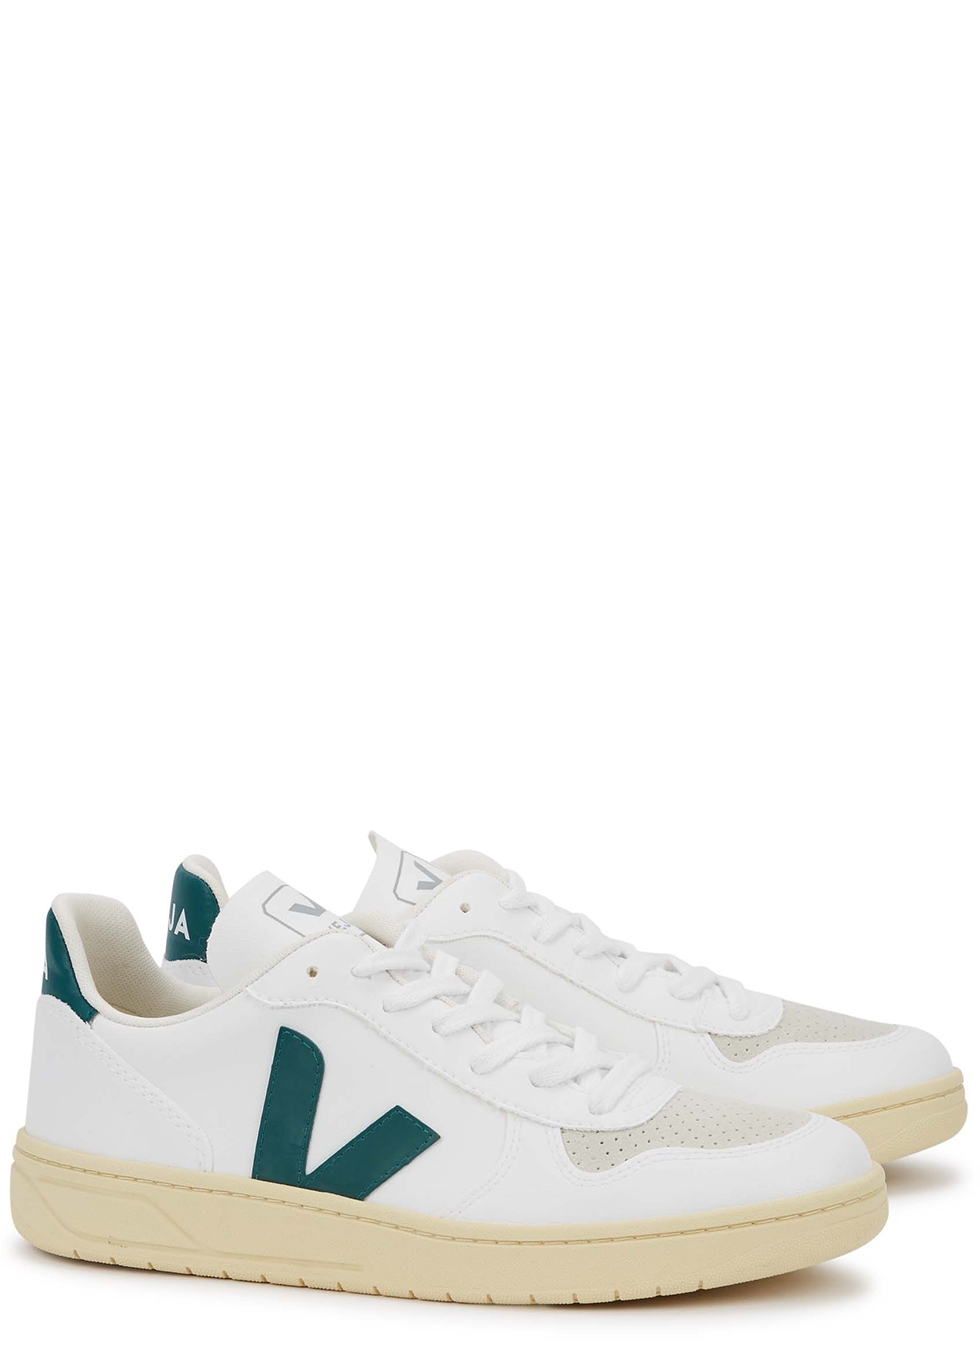 Veja V-10 Bastille white leather sneakers - Harvey Nichols